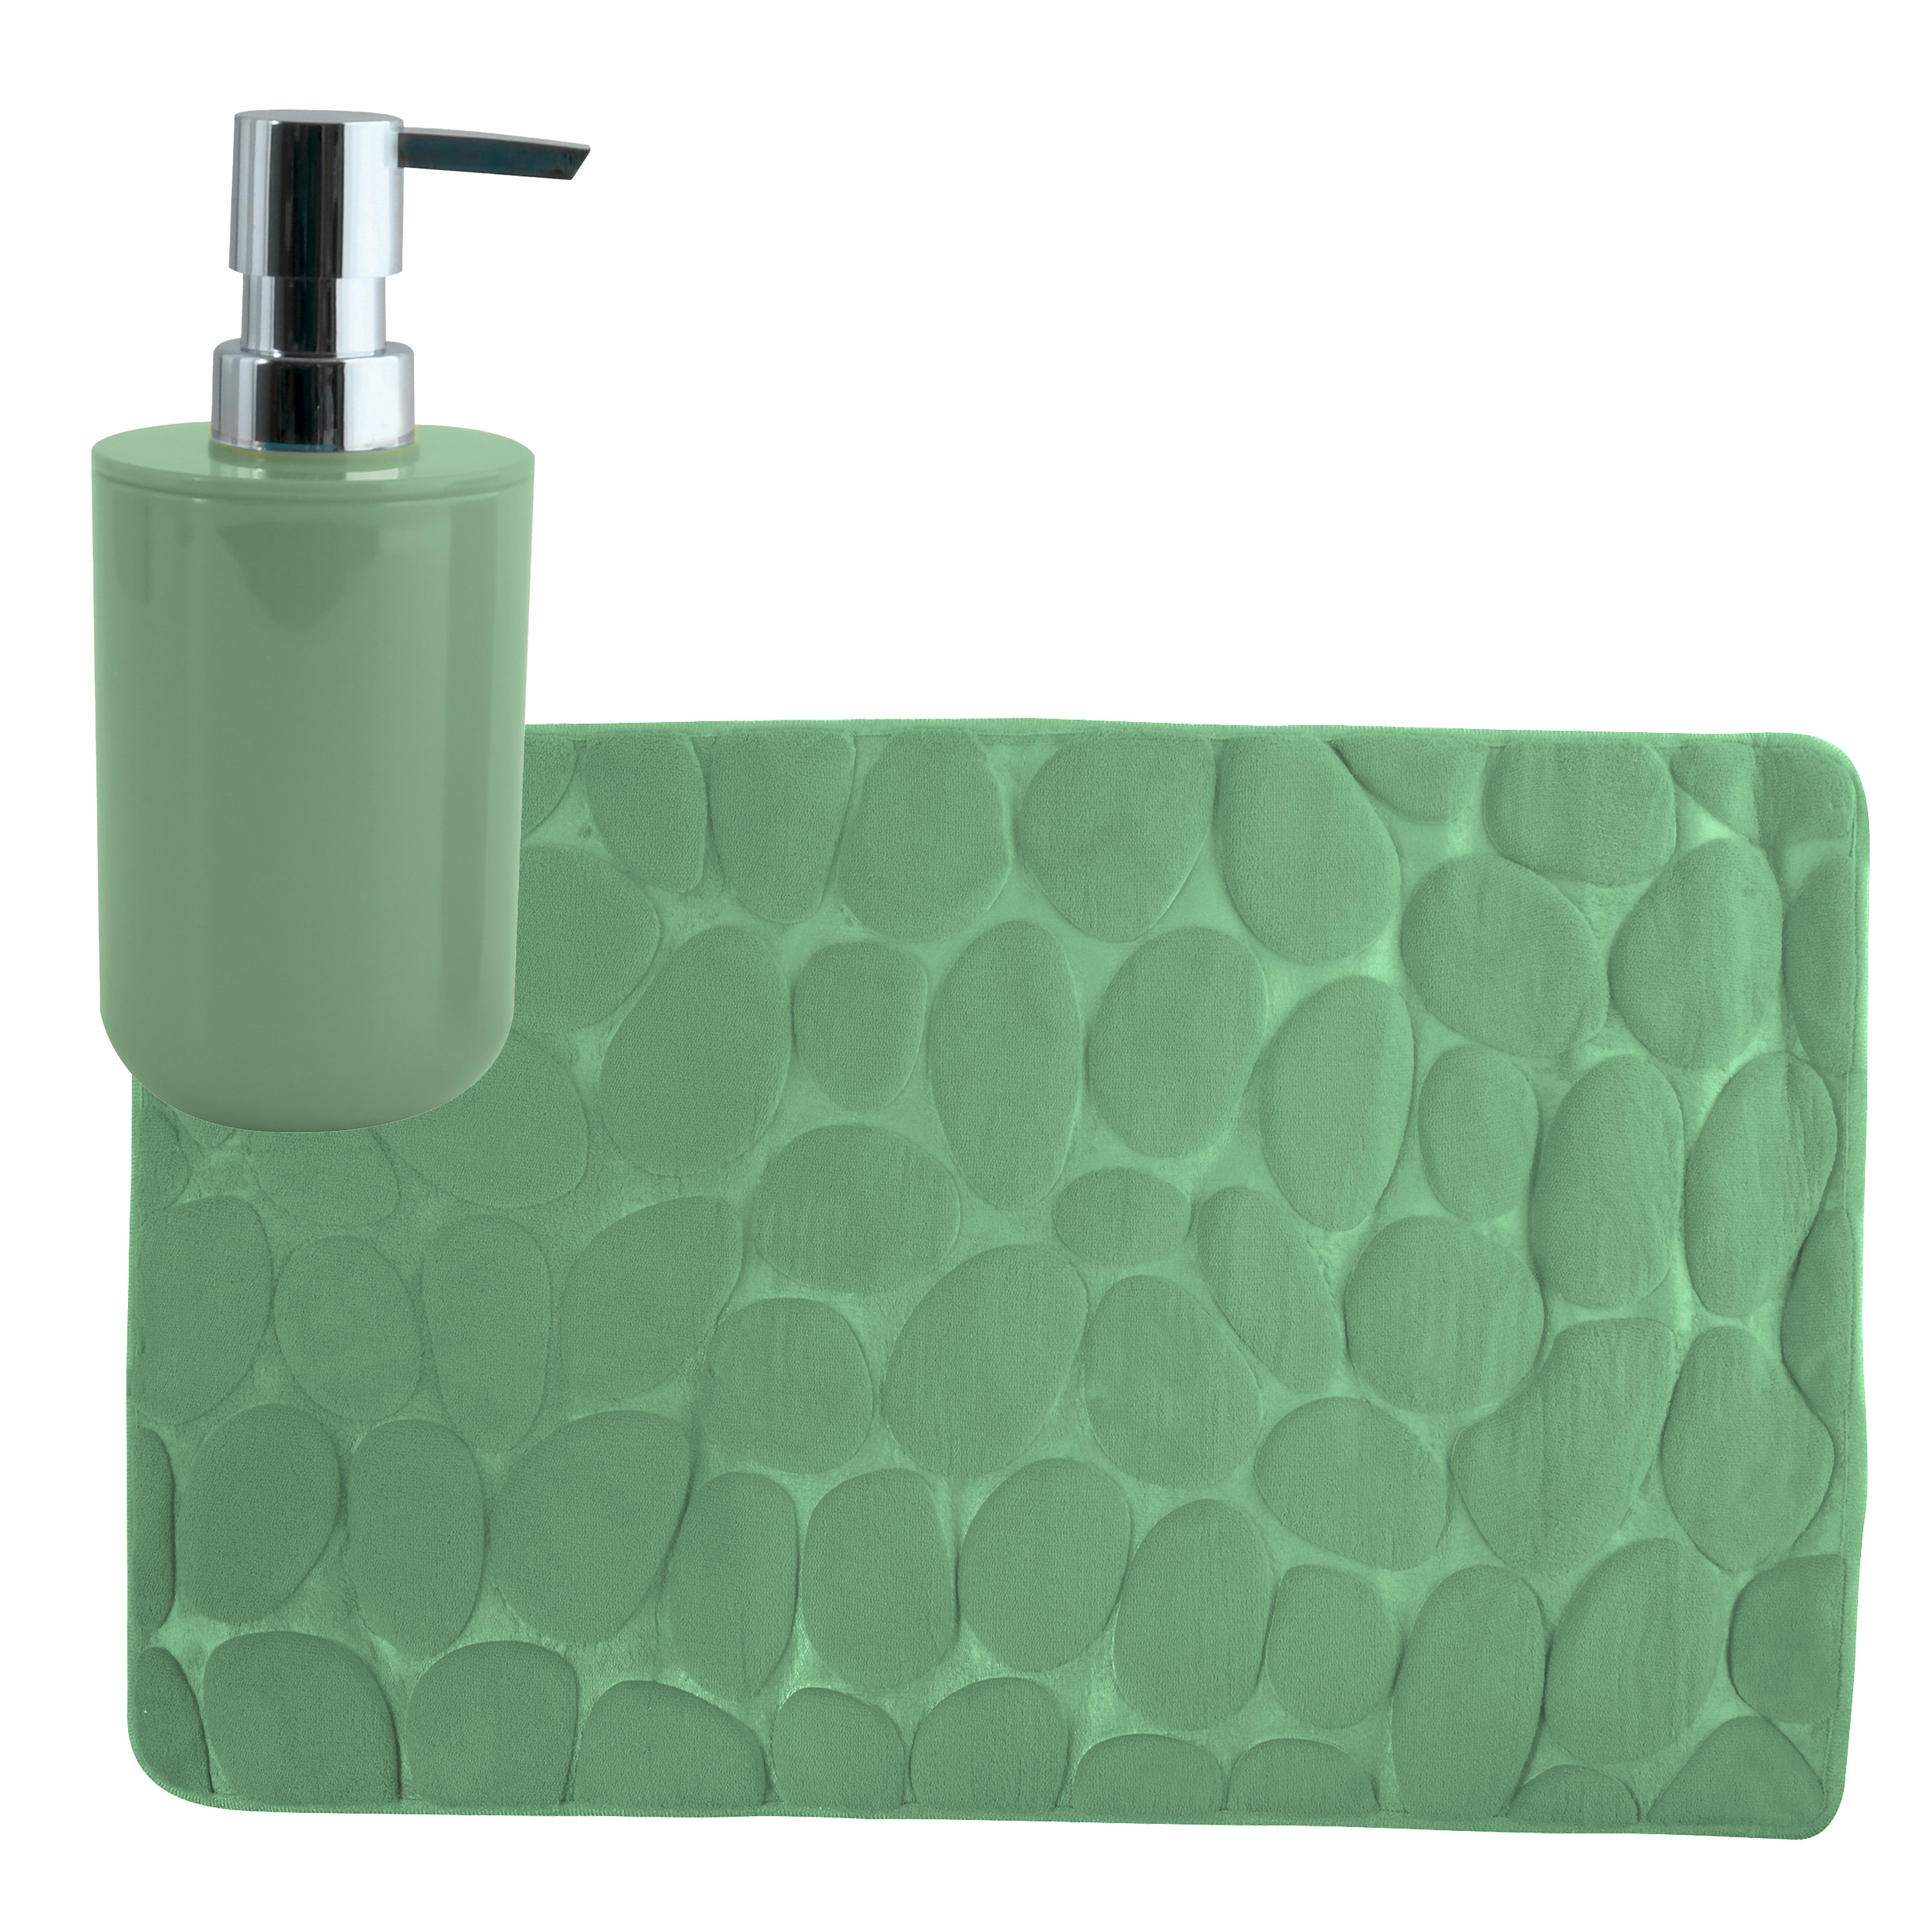 MSV badkamer droogloop mat-tapijt Kiezel 50 x 80 cm zelfde kleur zeeppompje groen